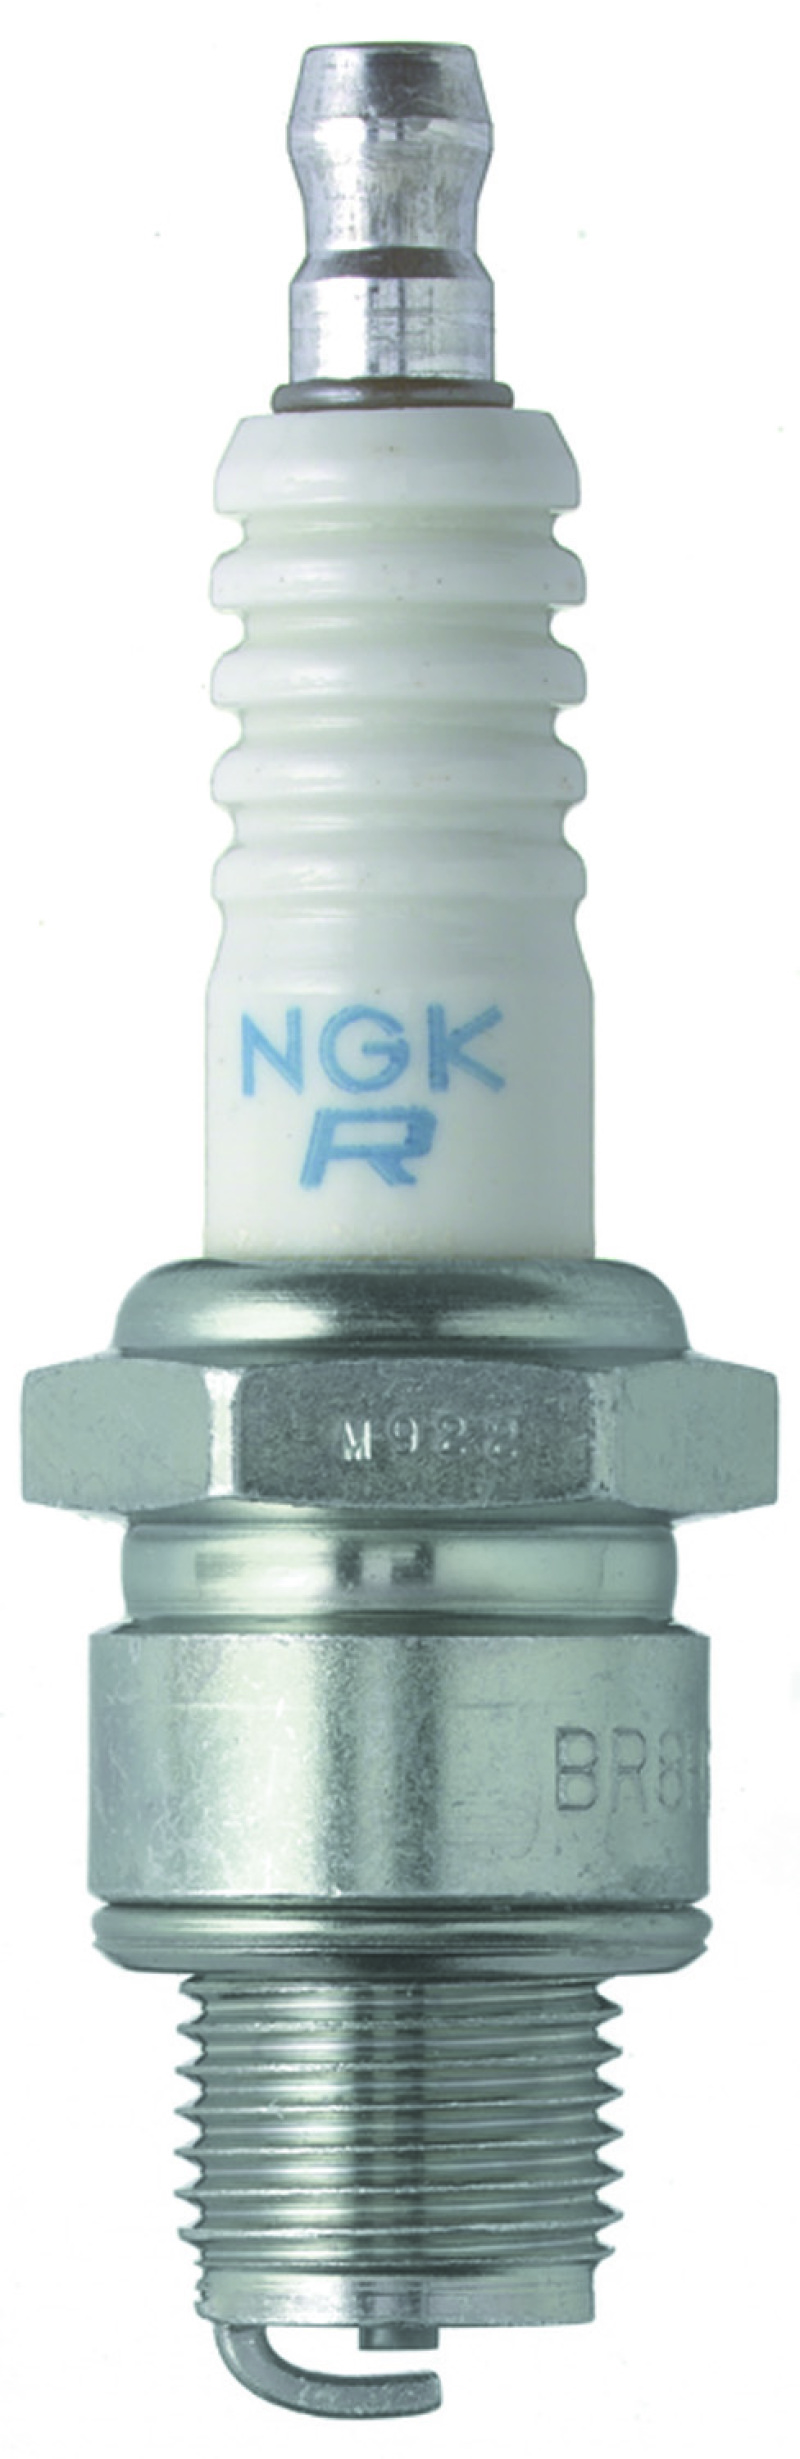 NGK BLYB Spark Plug Box of 6 (BR6HS) - 1507